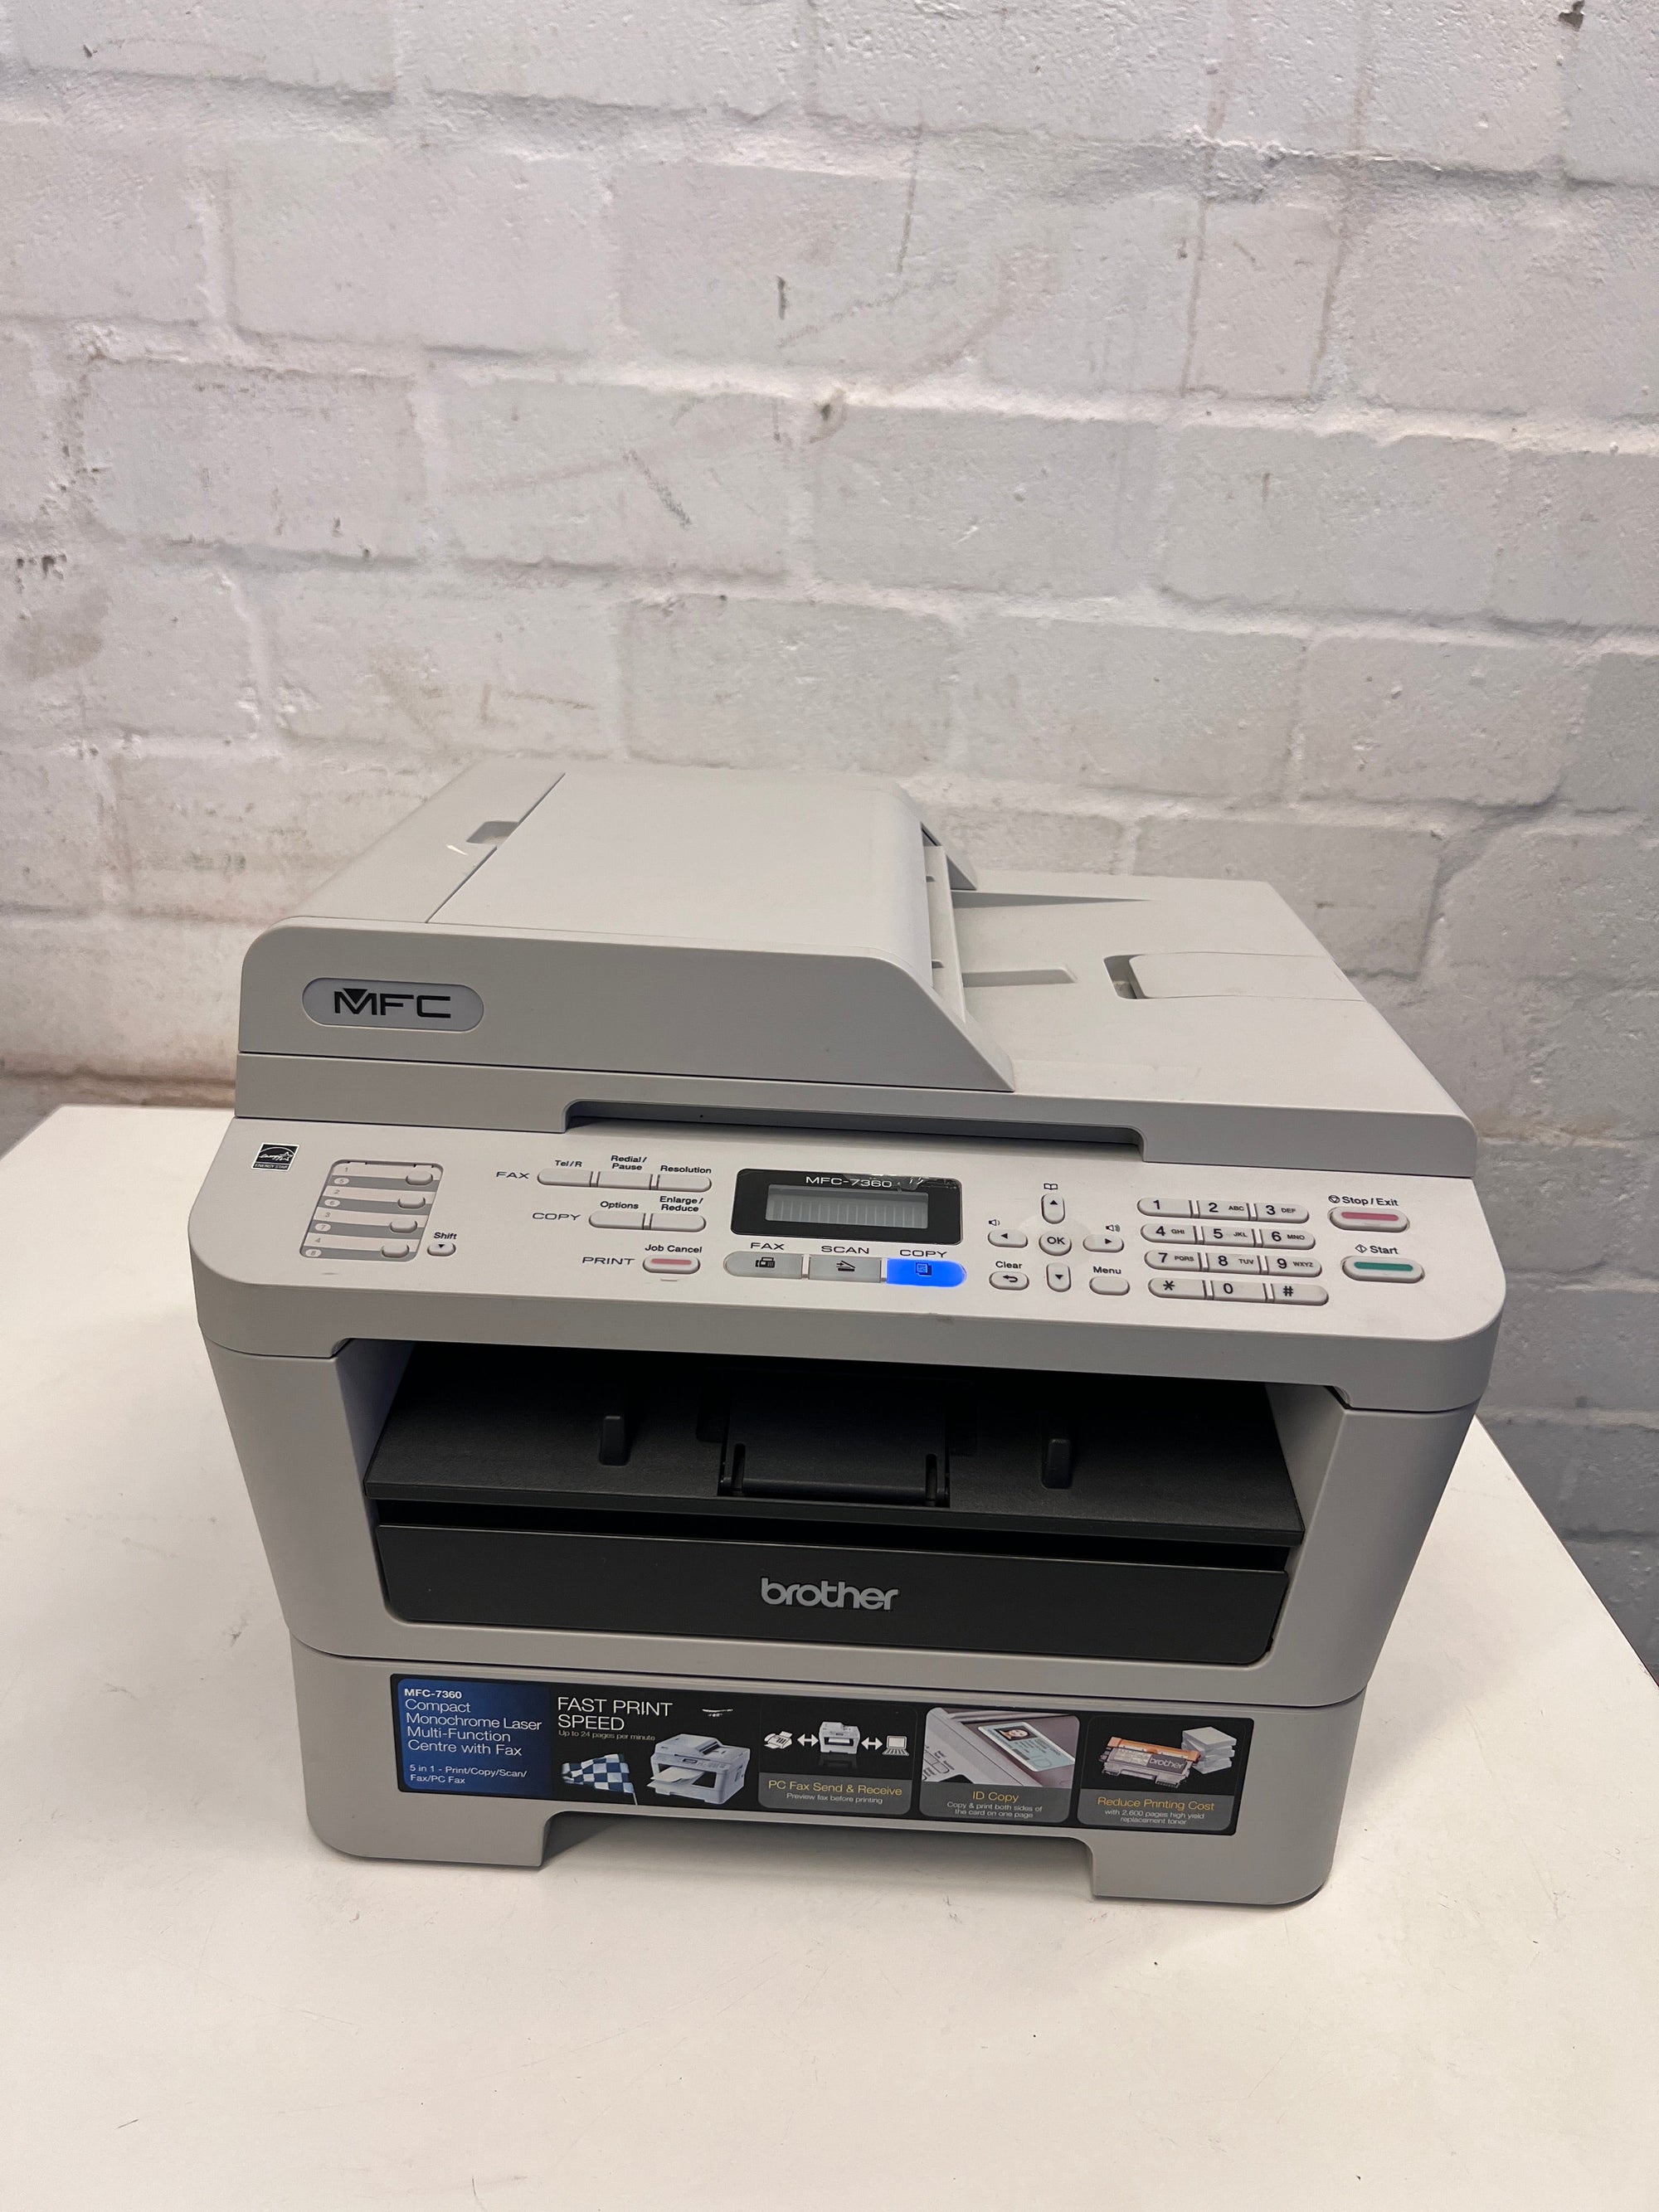 Brother MFC-7360 Printer/Copier/Fax